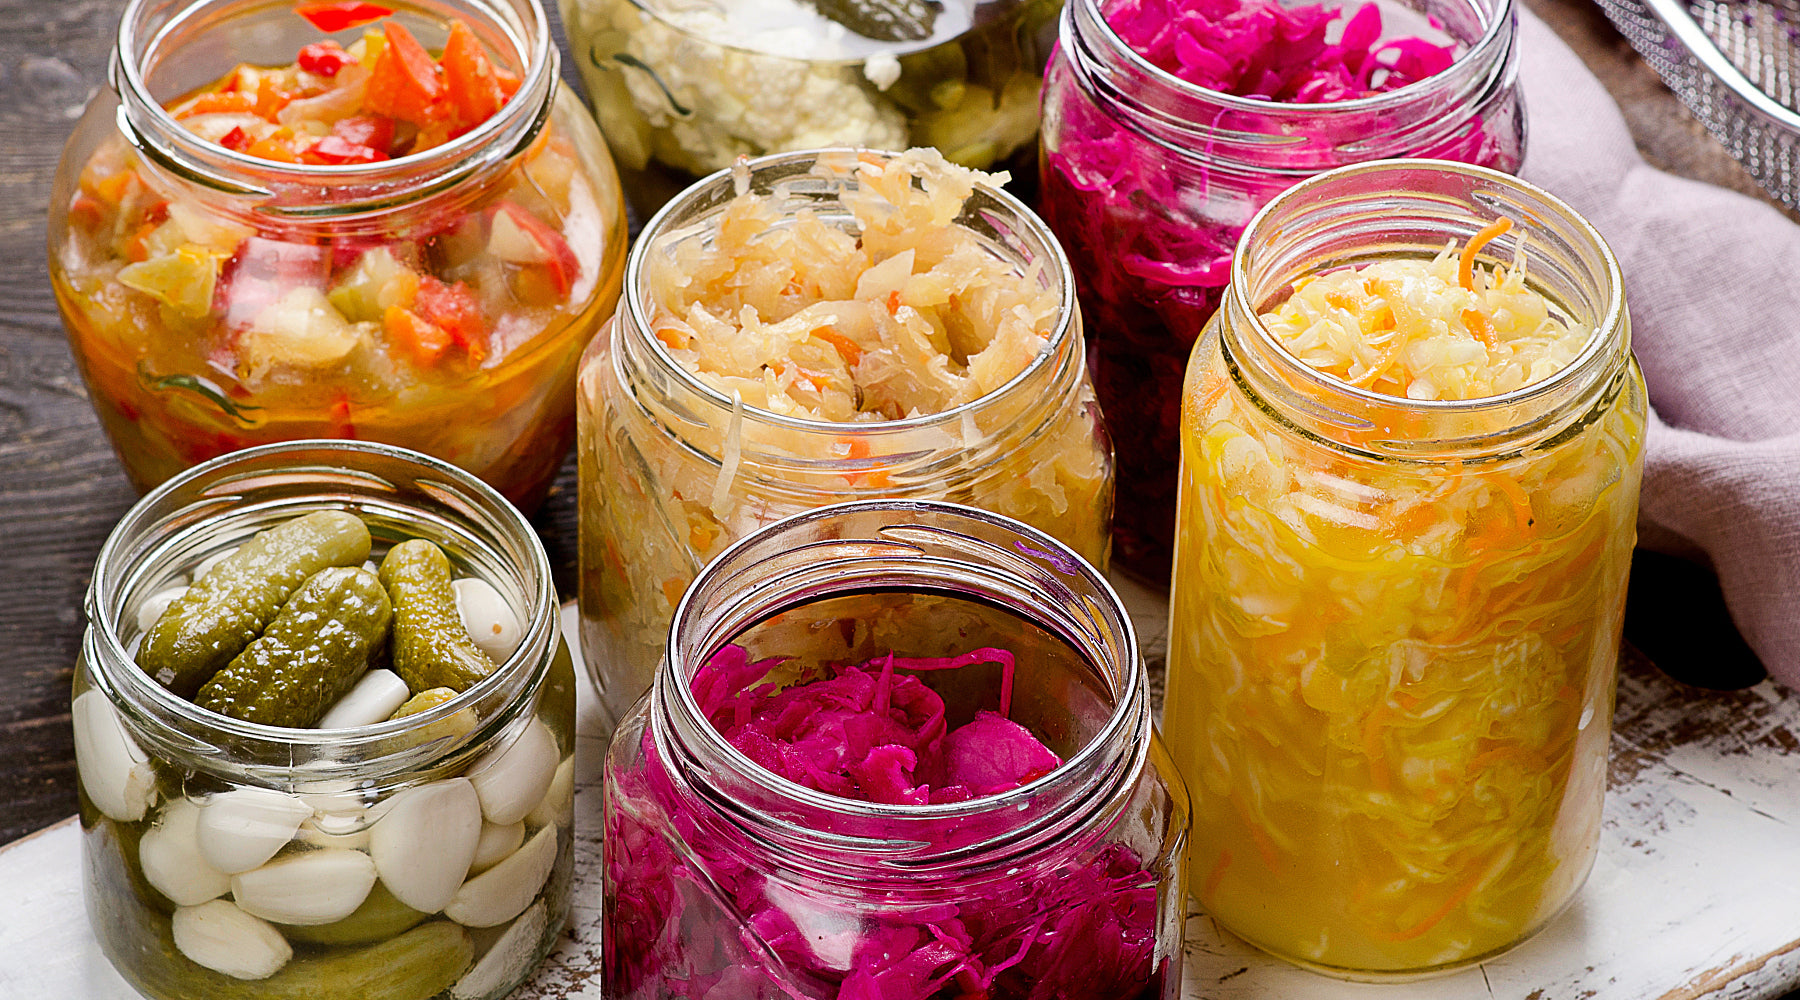 Fermented Foods contain natural probiotics